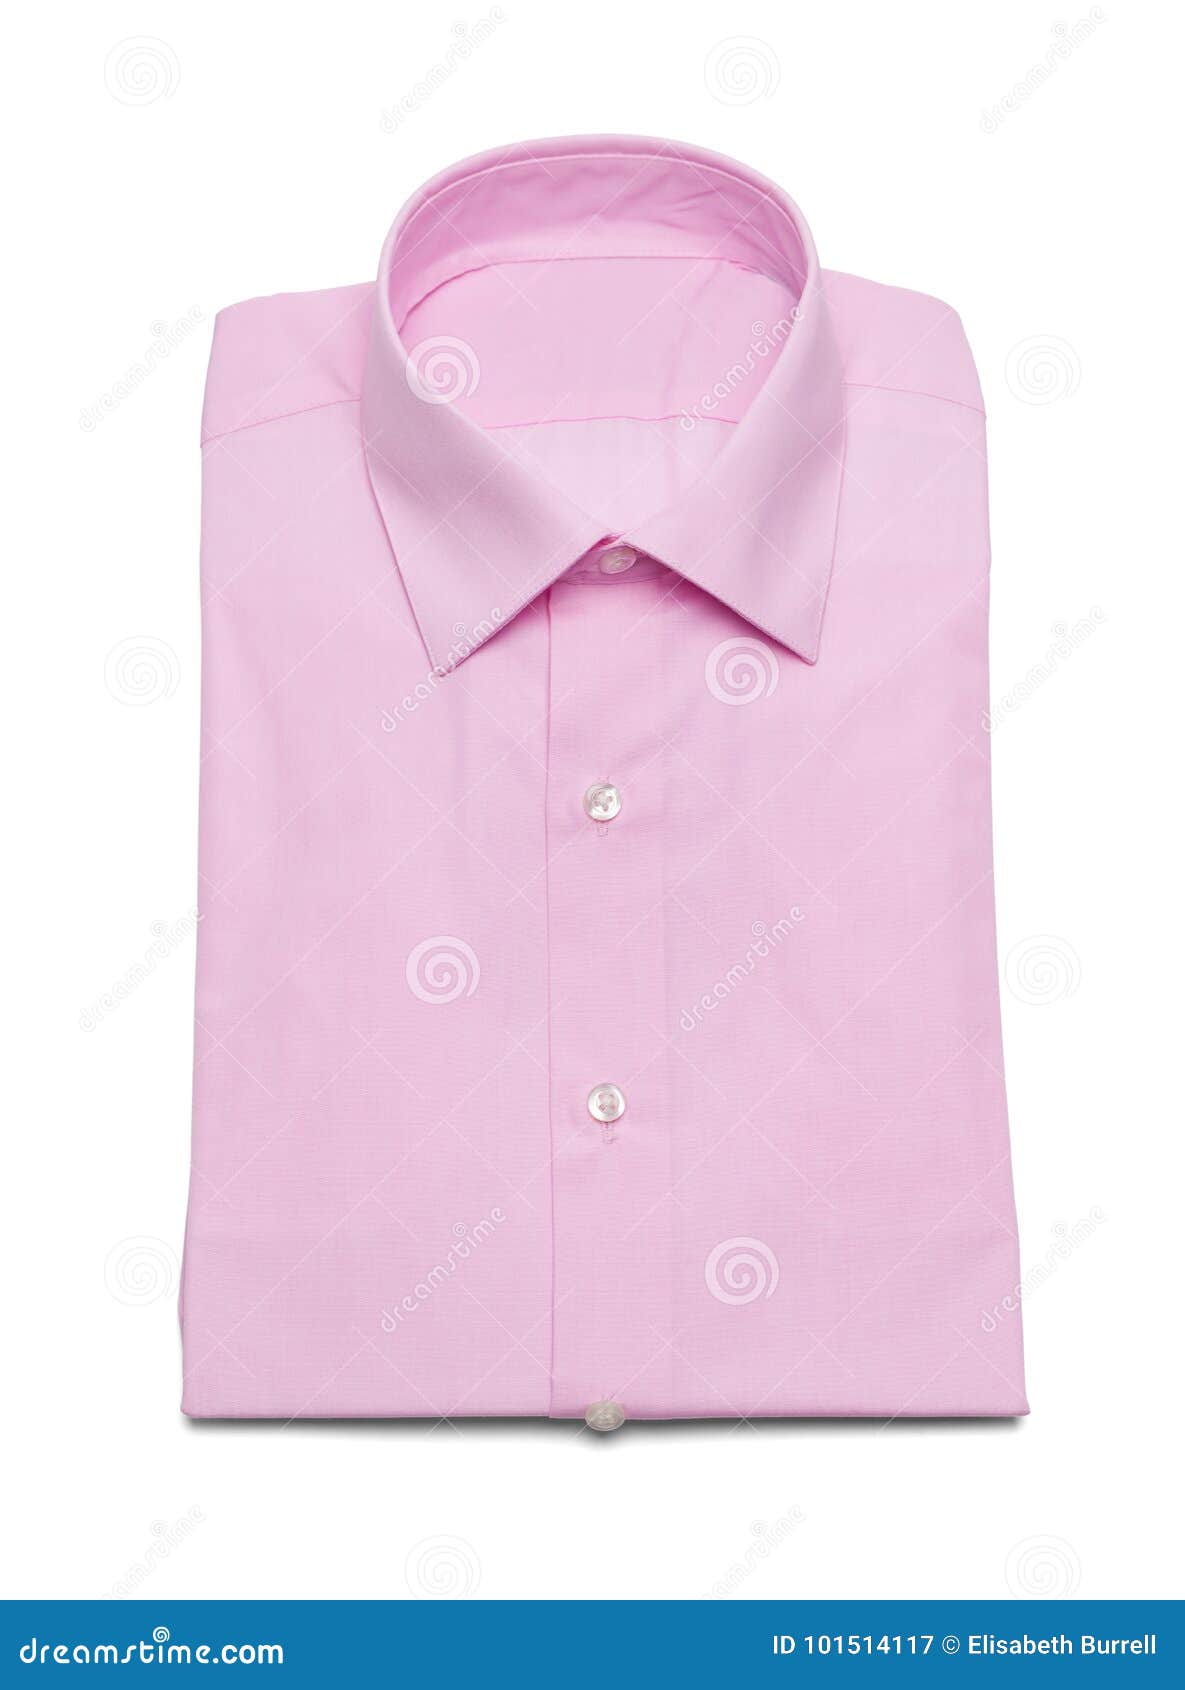 Pink Dress Shirt stock image. Image of business, background - 101514117